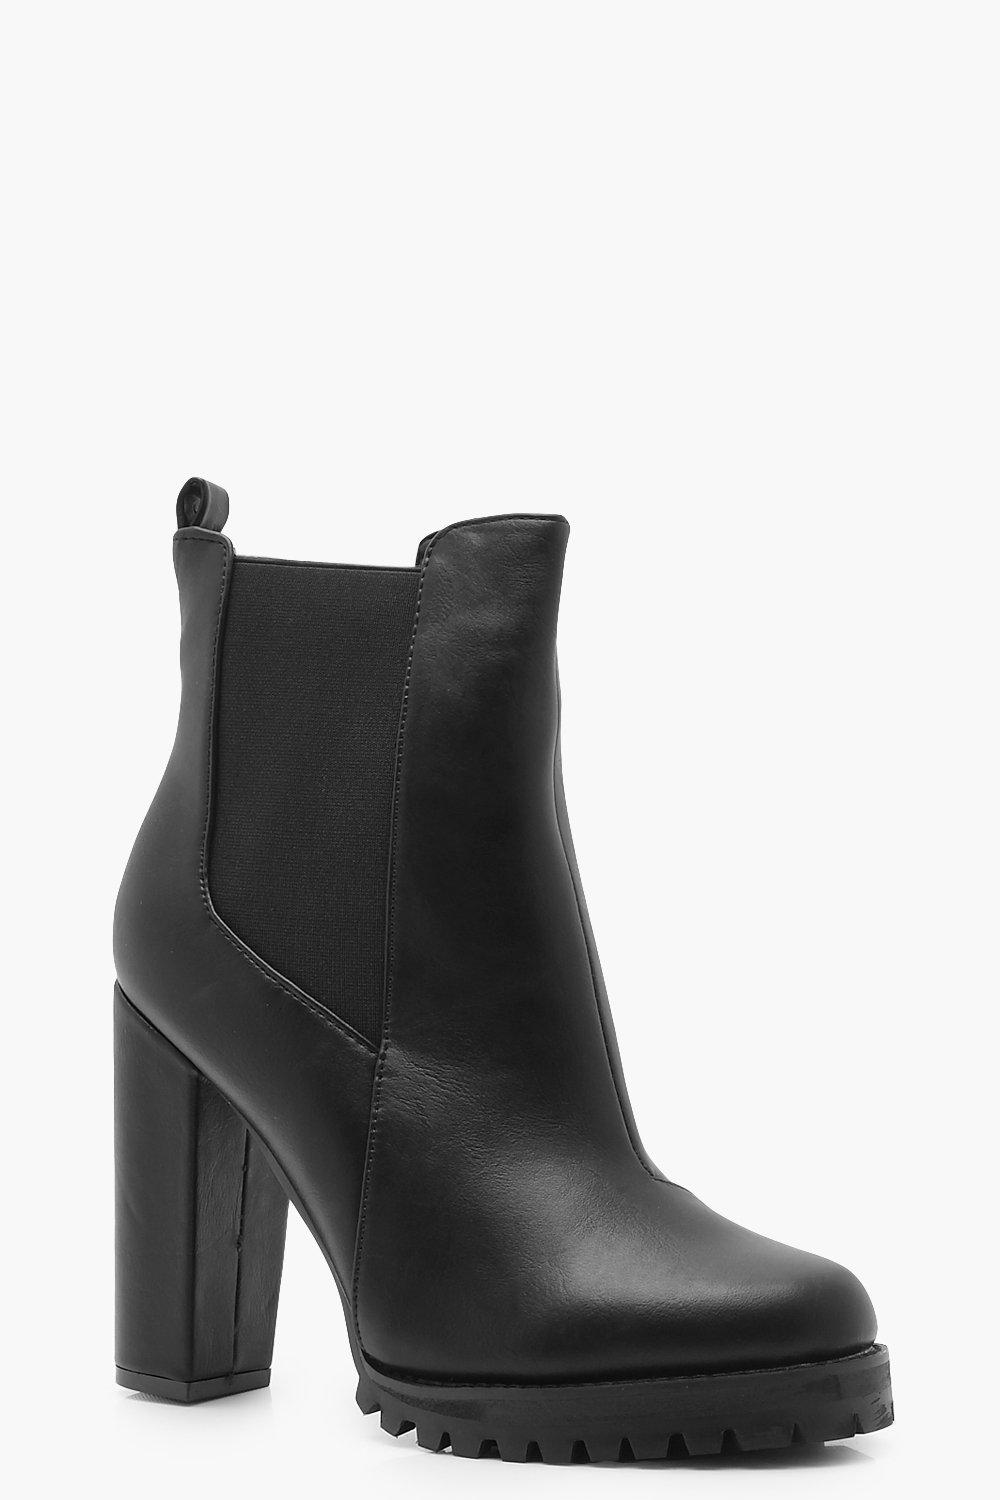 black patent snakeskin boots